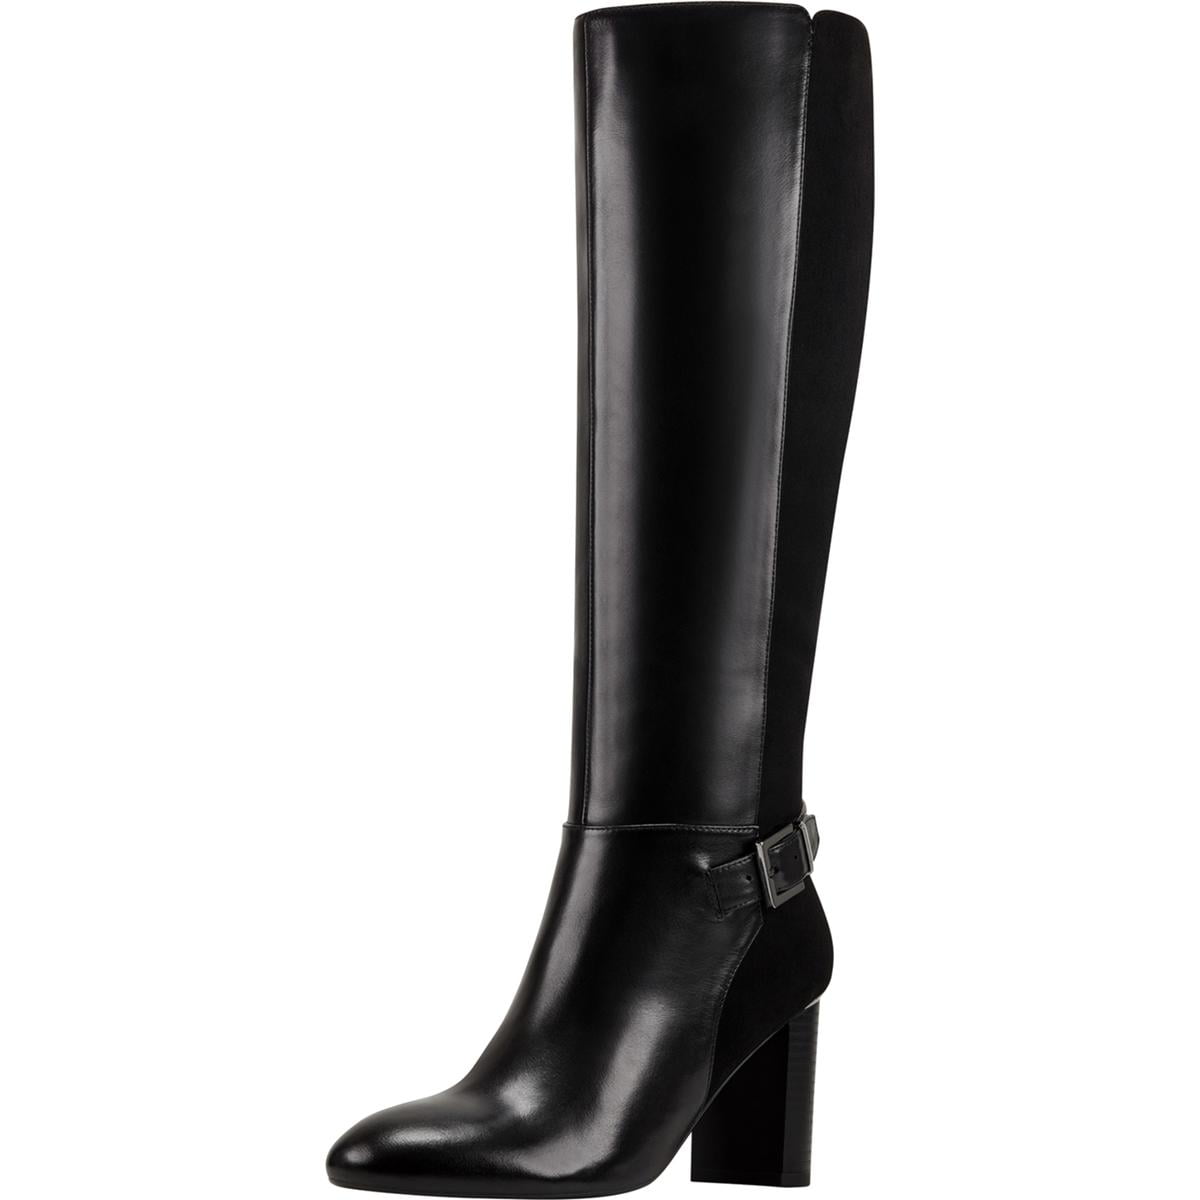 B,M Marc Fisher Womens Galayawc Black Riding Boots Shoes 6.5 Medium BHFO 8916 